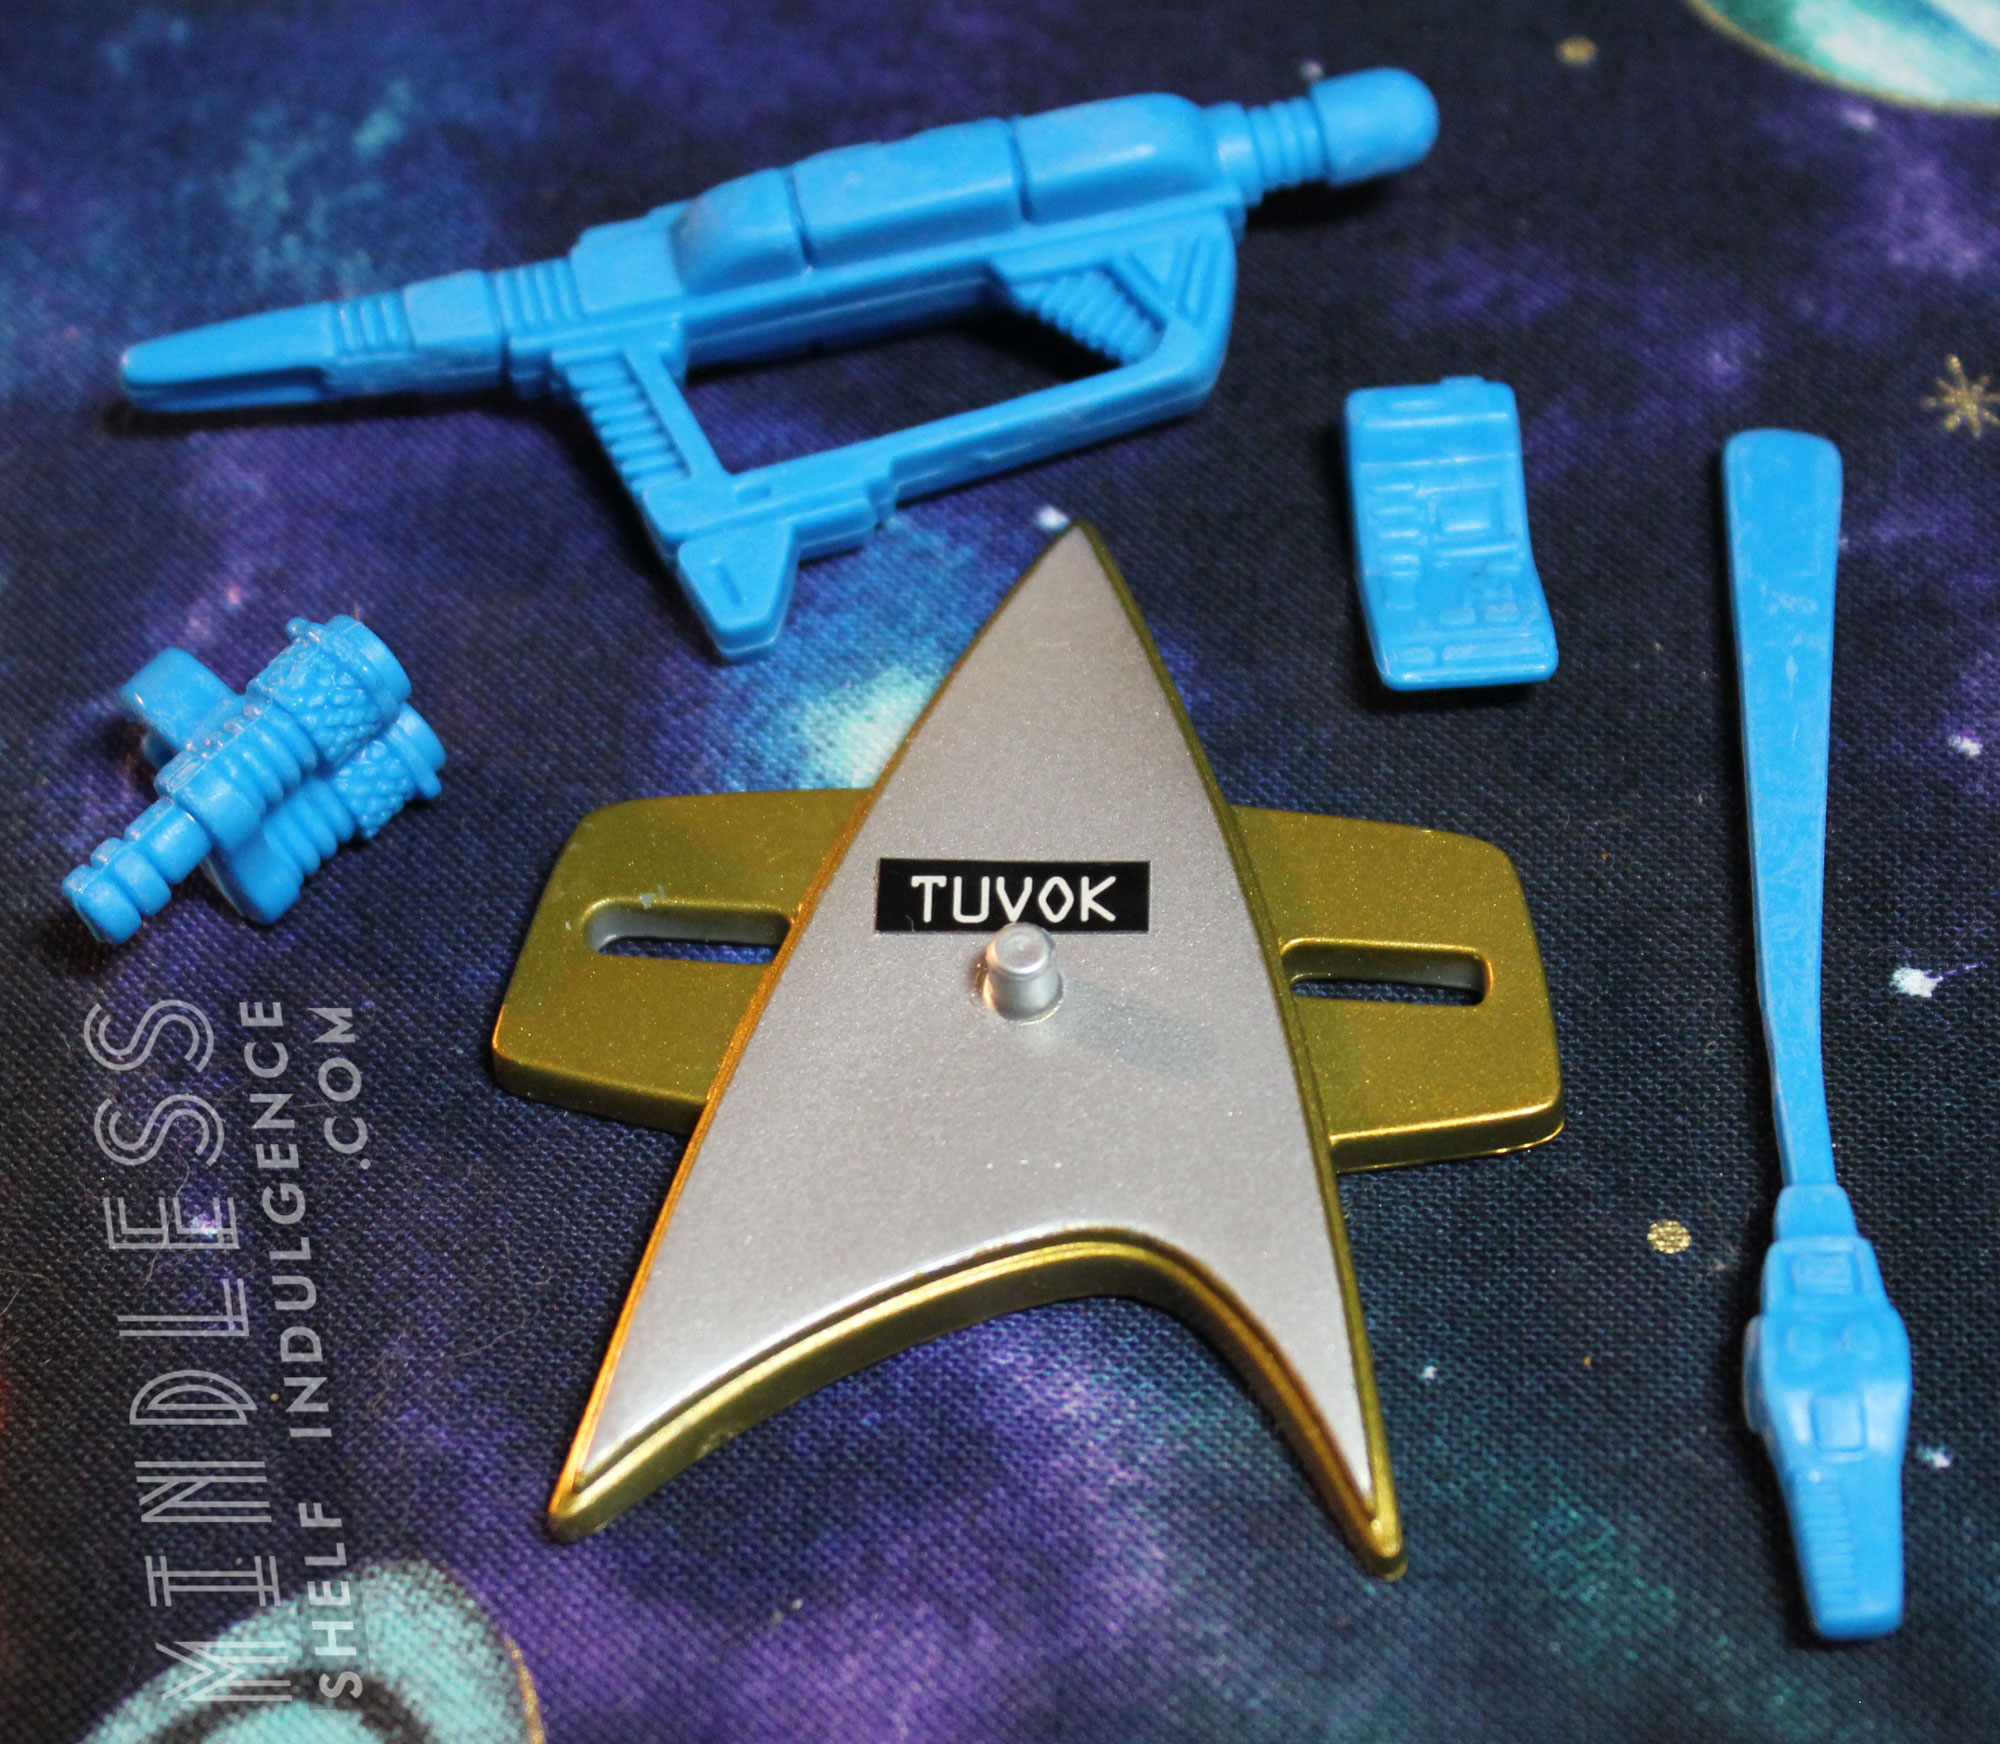 Tuvok's accessories